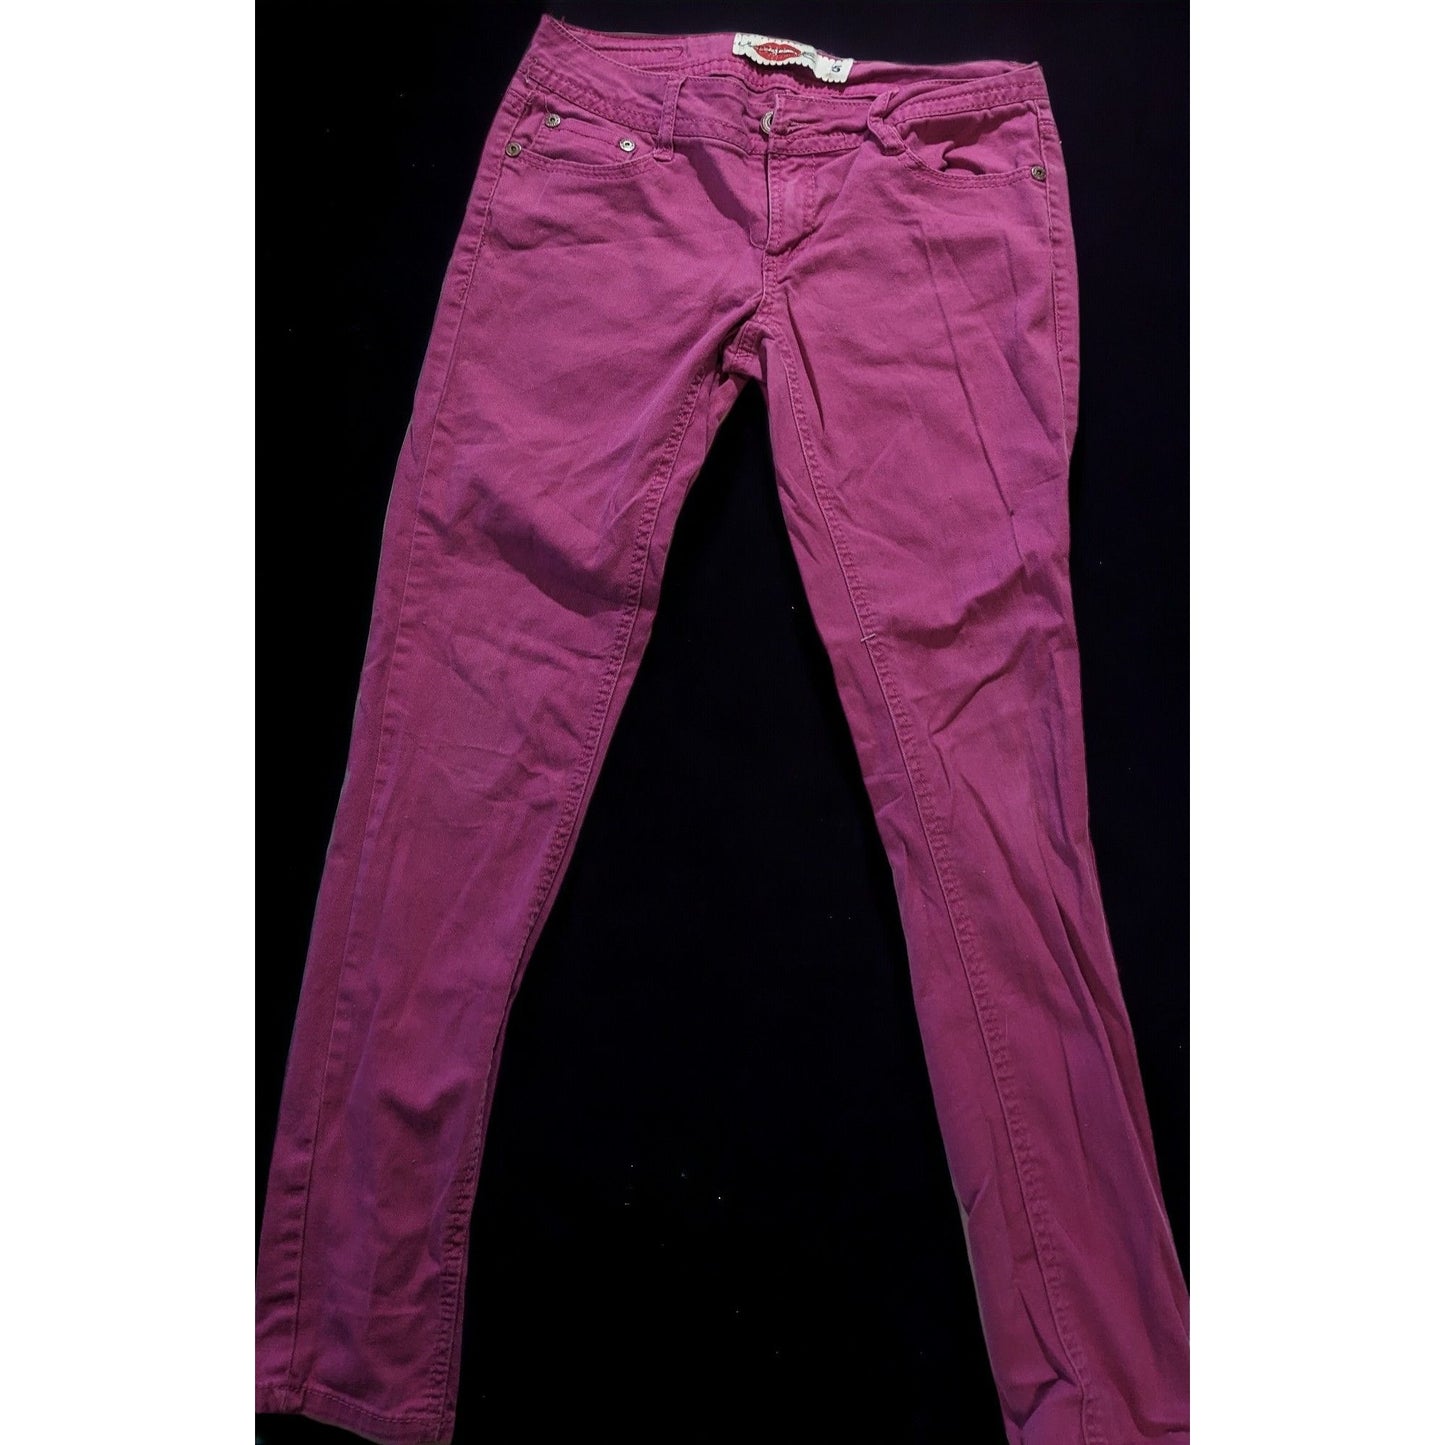 Ultralove Rose Pink Jeans